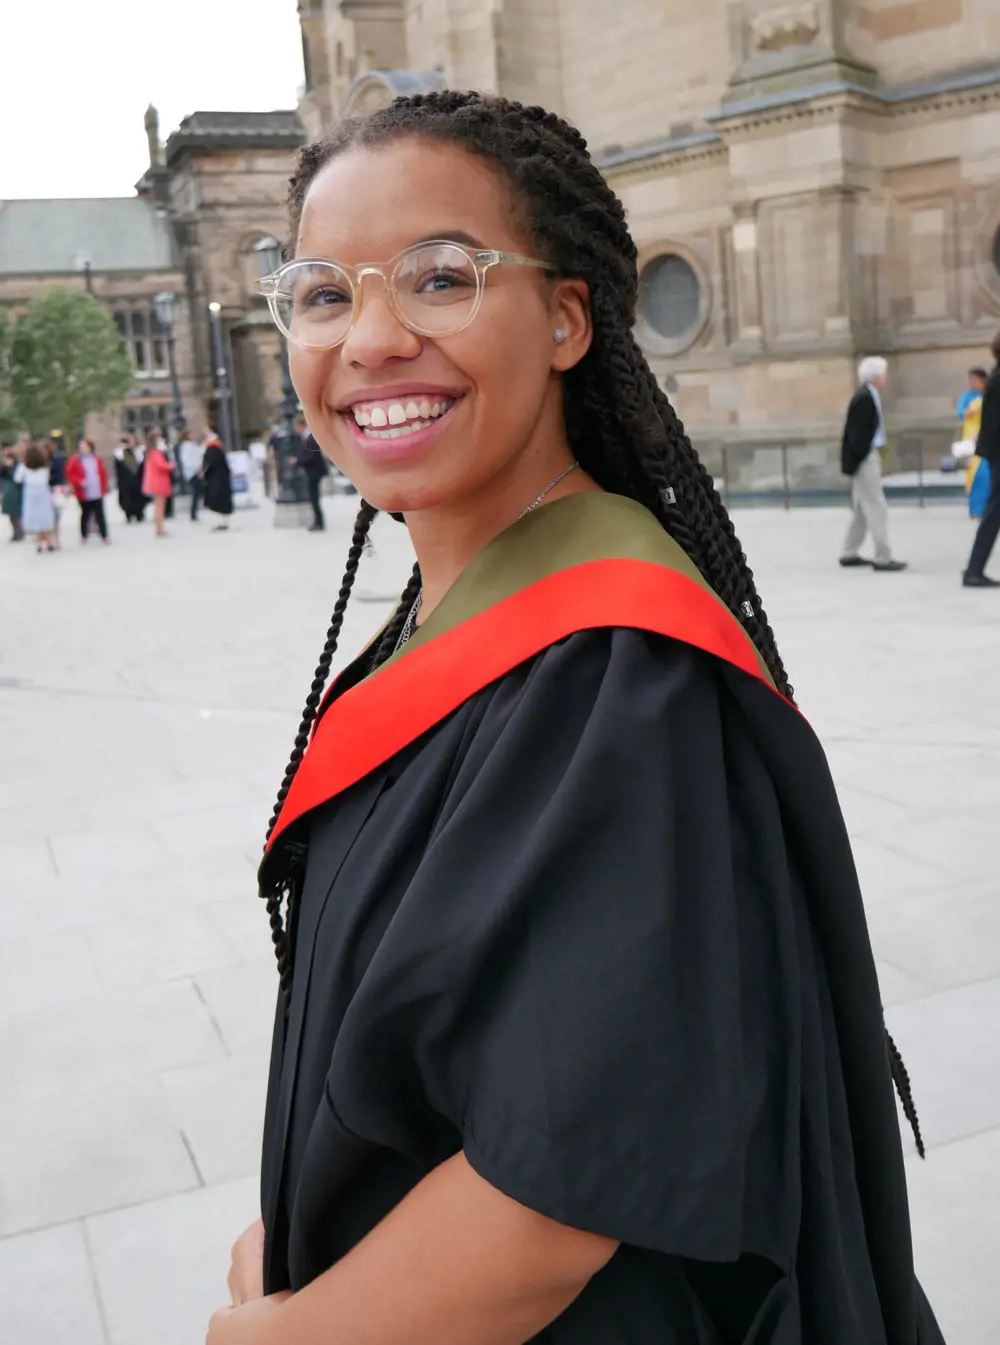 Olivia Sweeney in her graduation gown smiling.